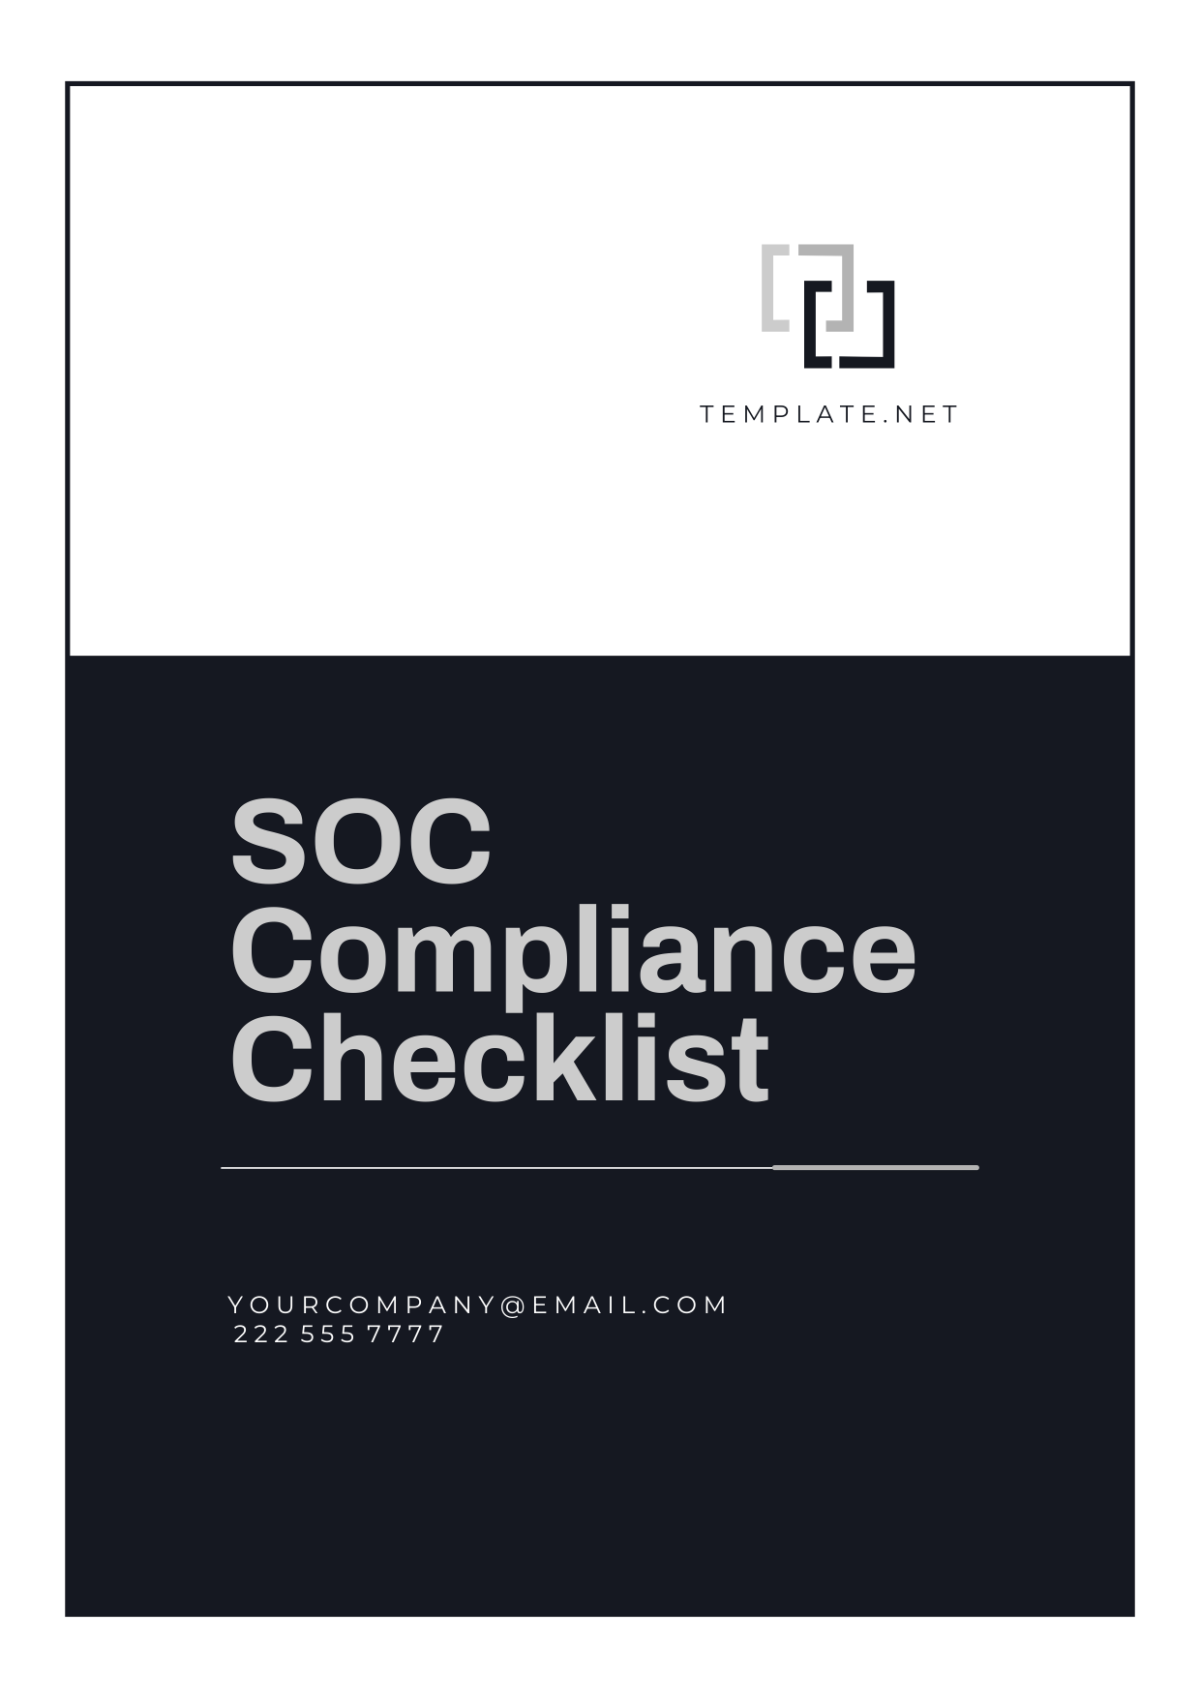 SOC Compliance Checklist Template